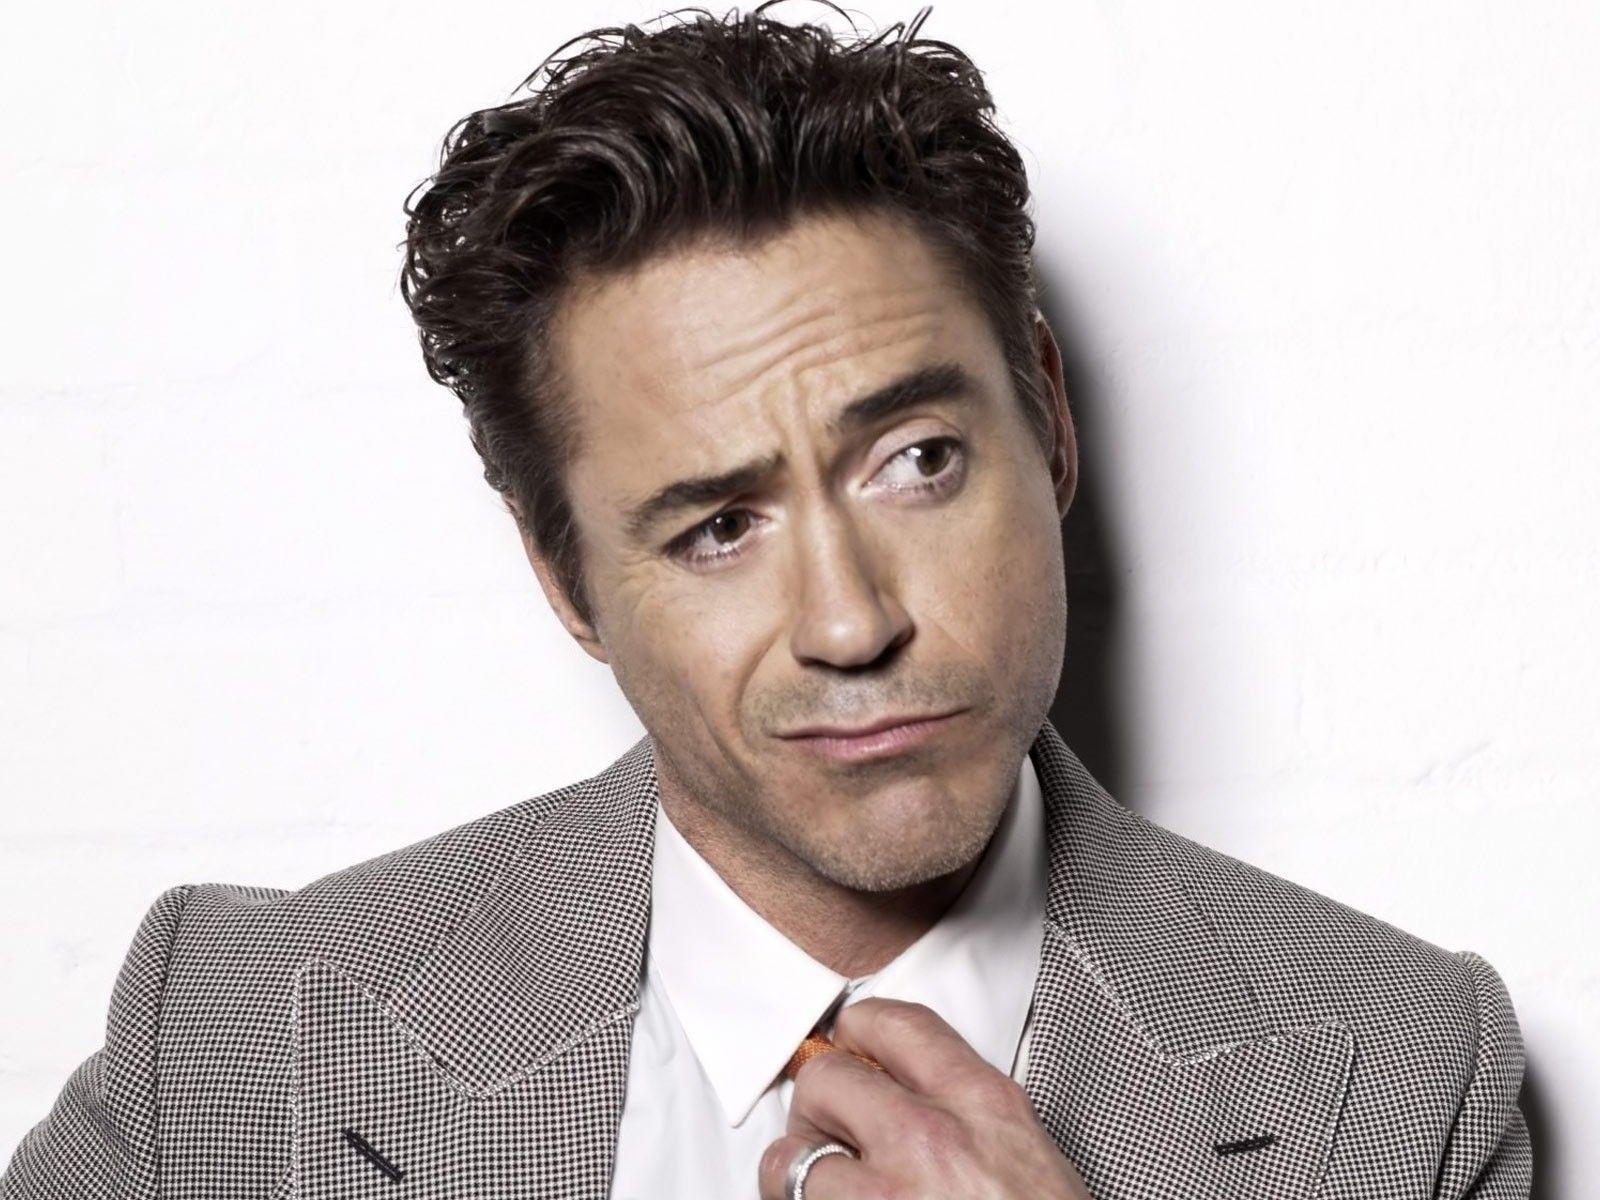 Most Popular HD Wallpaper of Robert Downey Jr Hollywood Celebrity